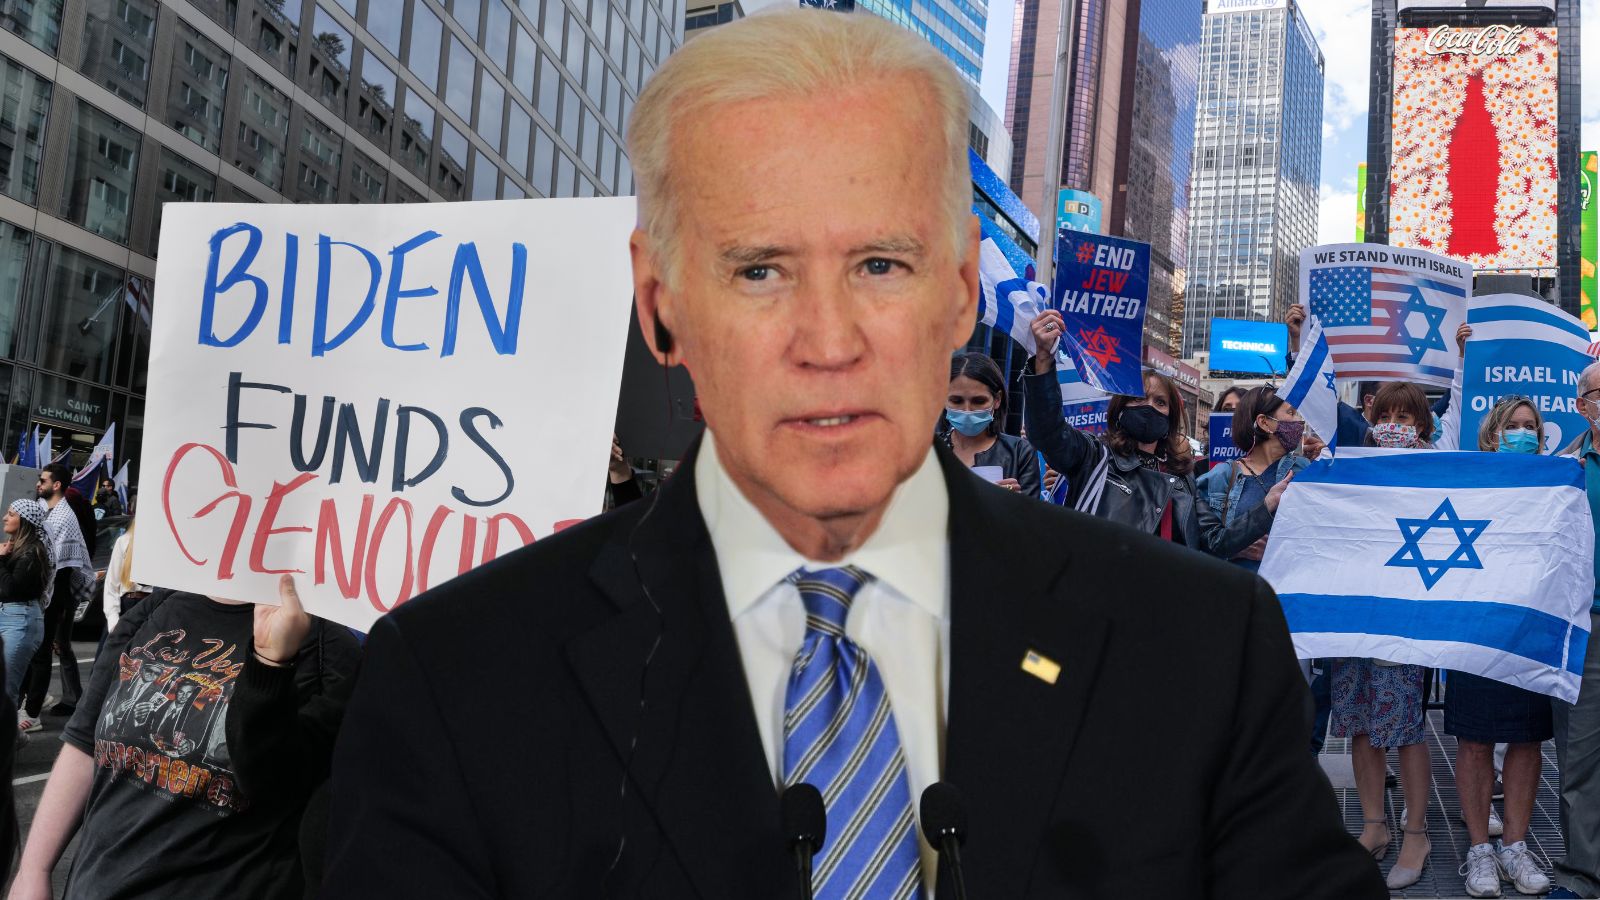 “Genocide Joe” – Biden Faces Youth Revolt Over Ceasefire Stance